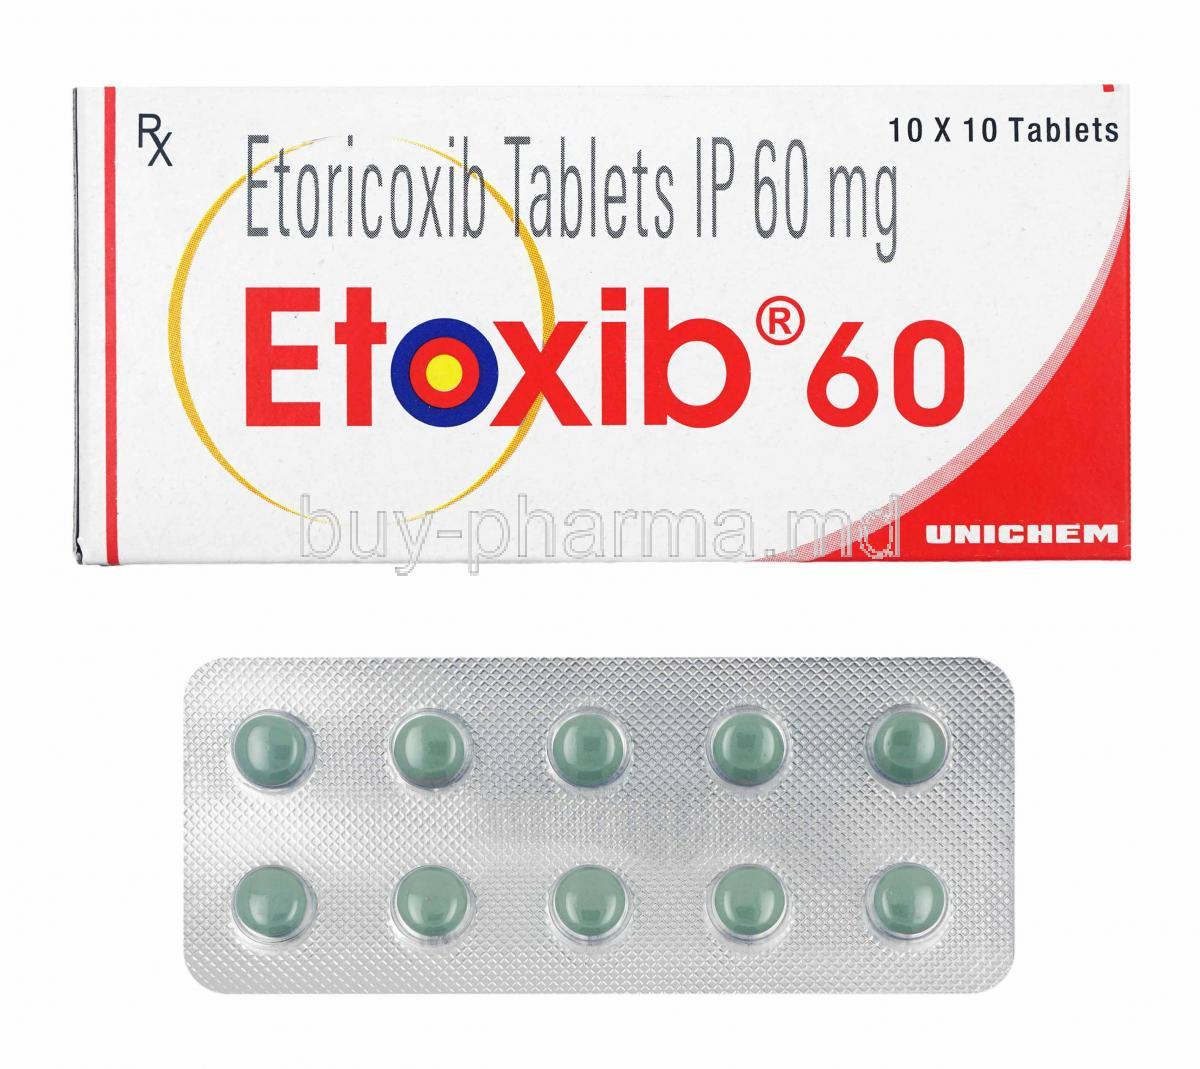 Etoxib, Etoricoxib 60mg box and tablets